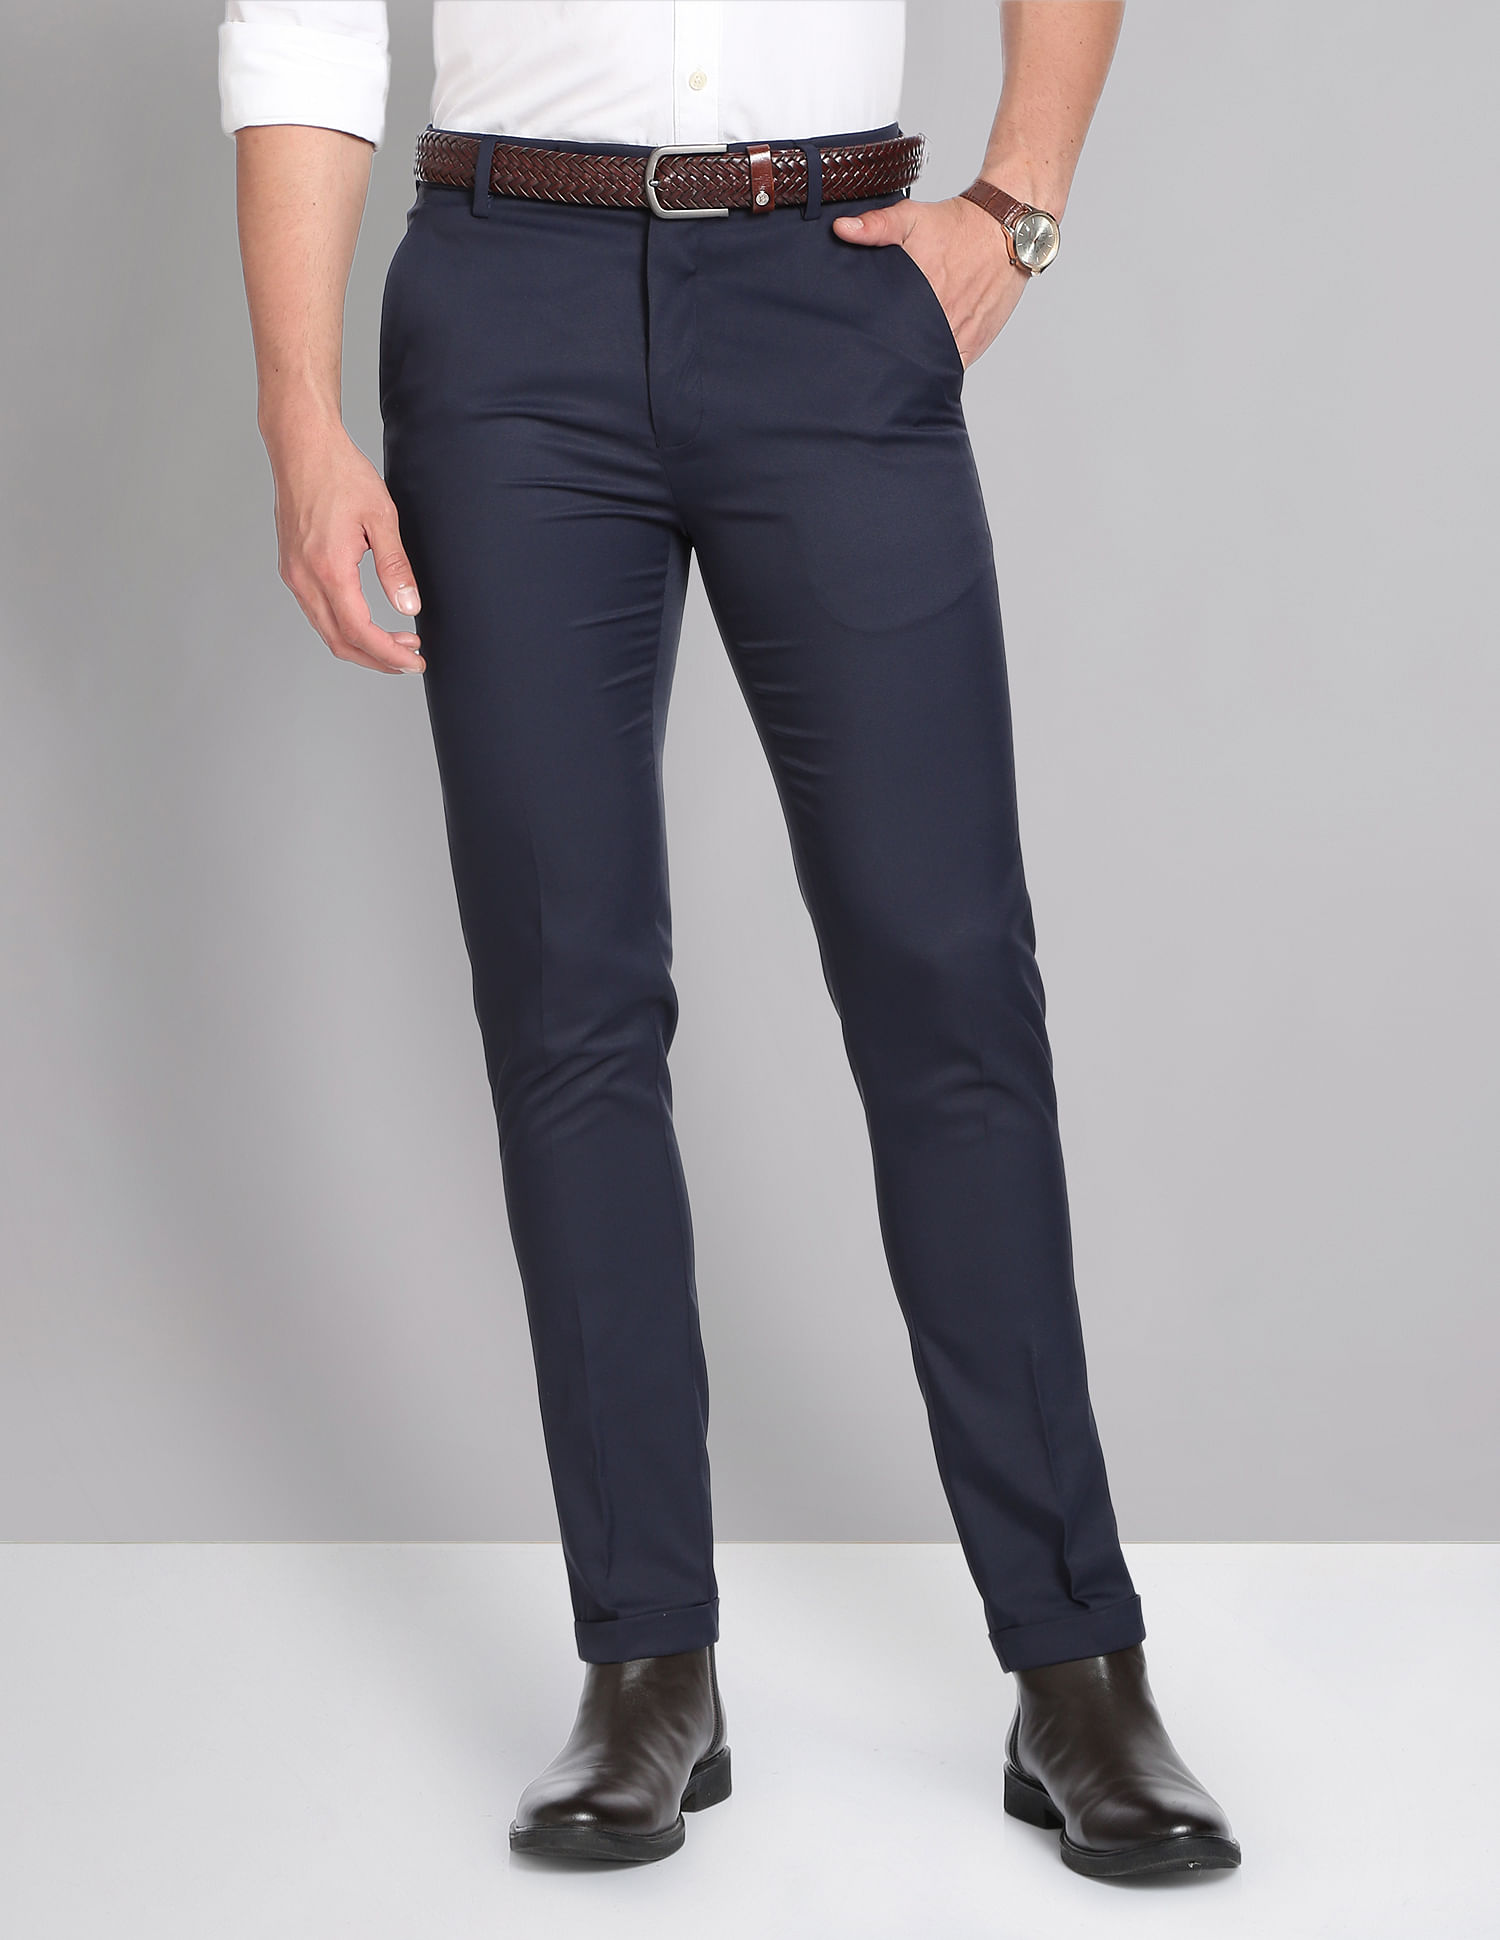 Buy Black Trousers  Pants for Men by THOMAS SCOTT Online  Ajiocom